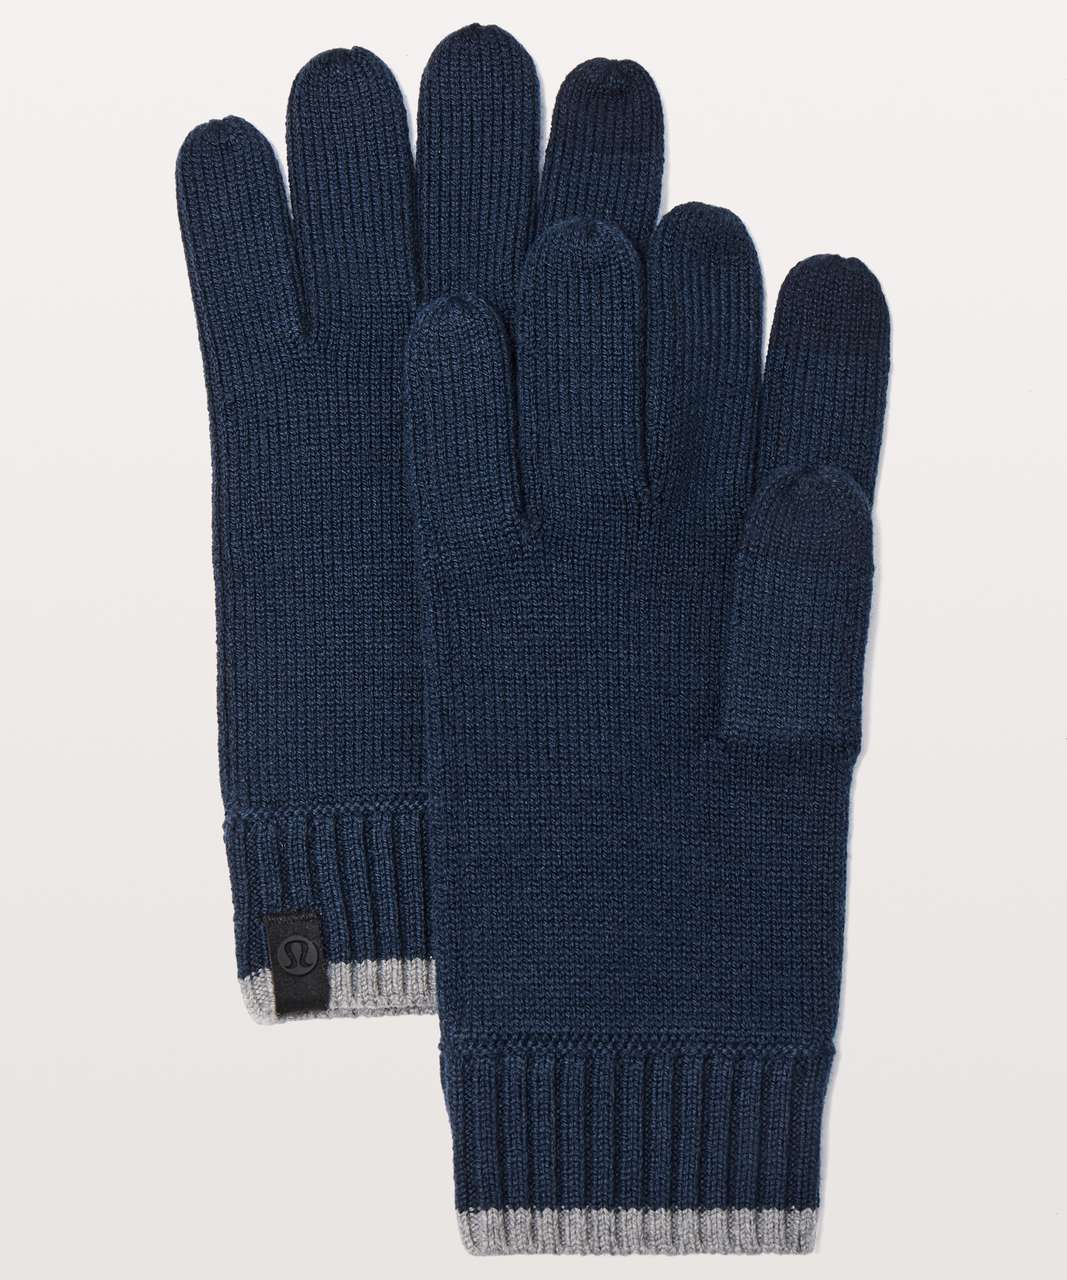 Lululemon Cold Pursuit Knit Gloves - True Navy